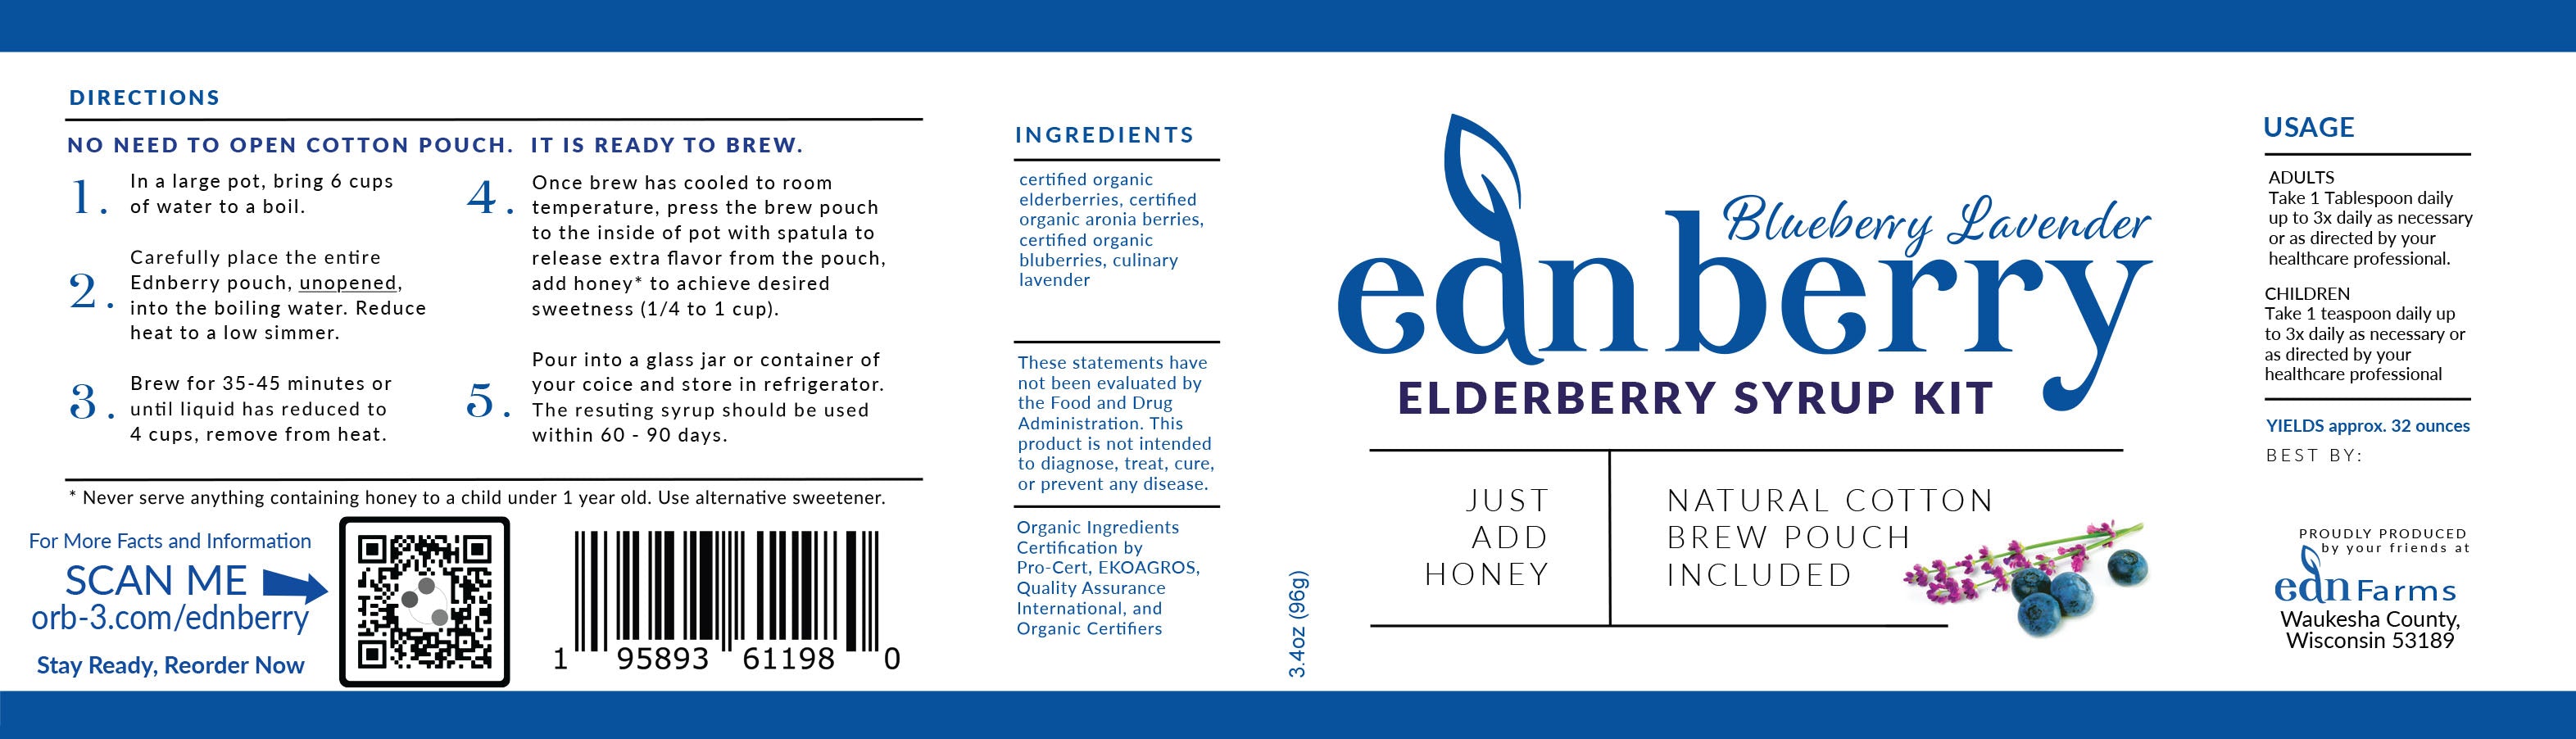 Label for Ednberry Blueberry Lavender elderberry syrup kit